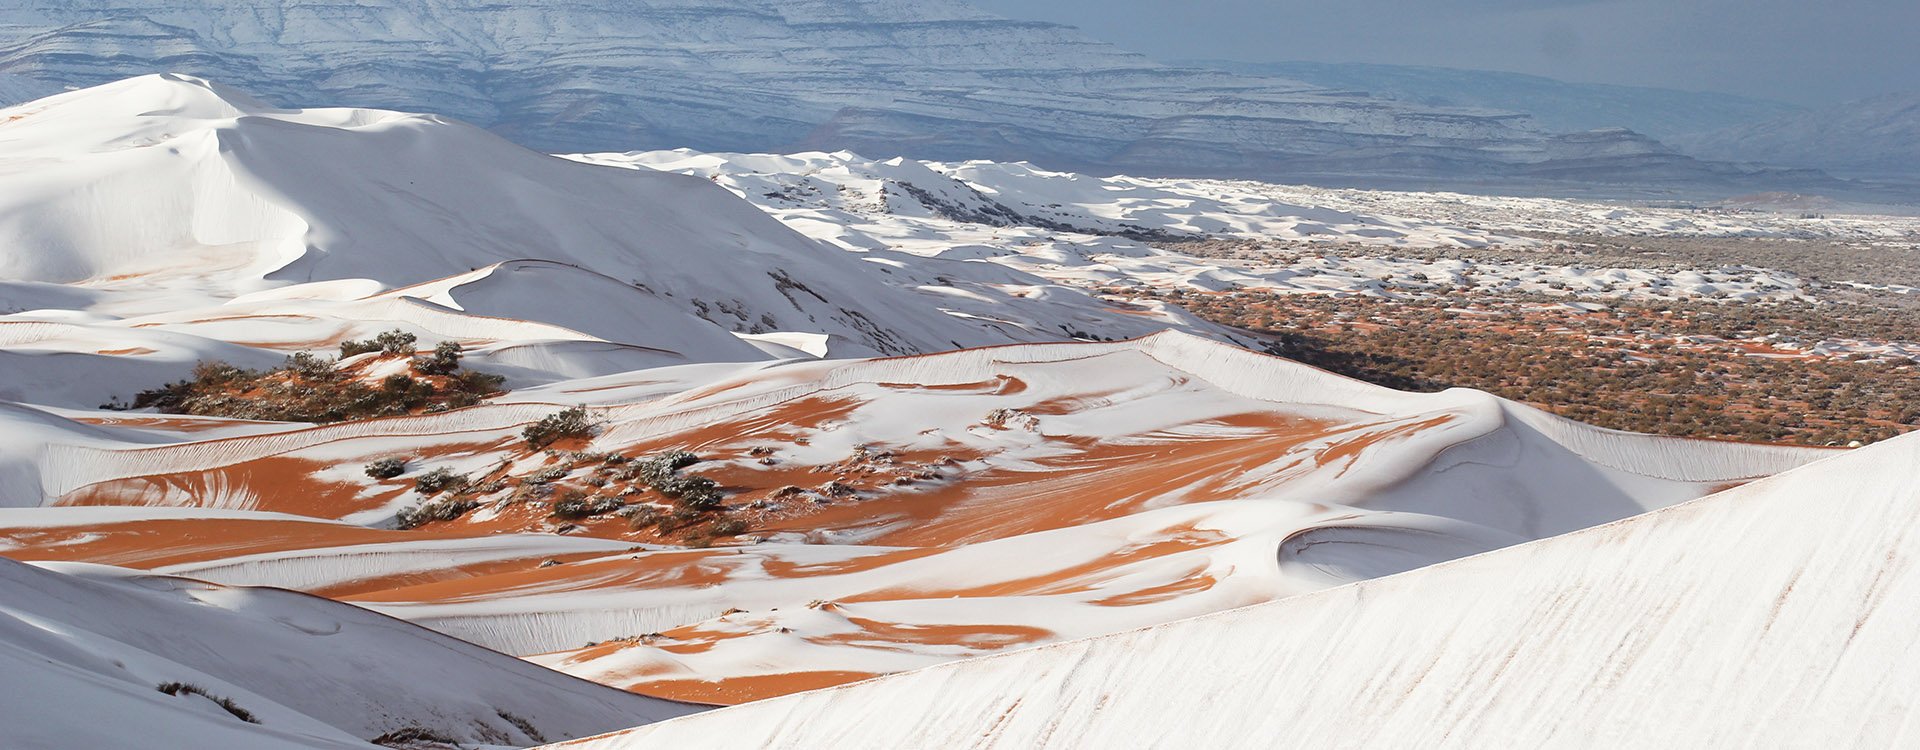 Snow falls in the Sahara